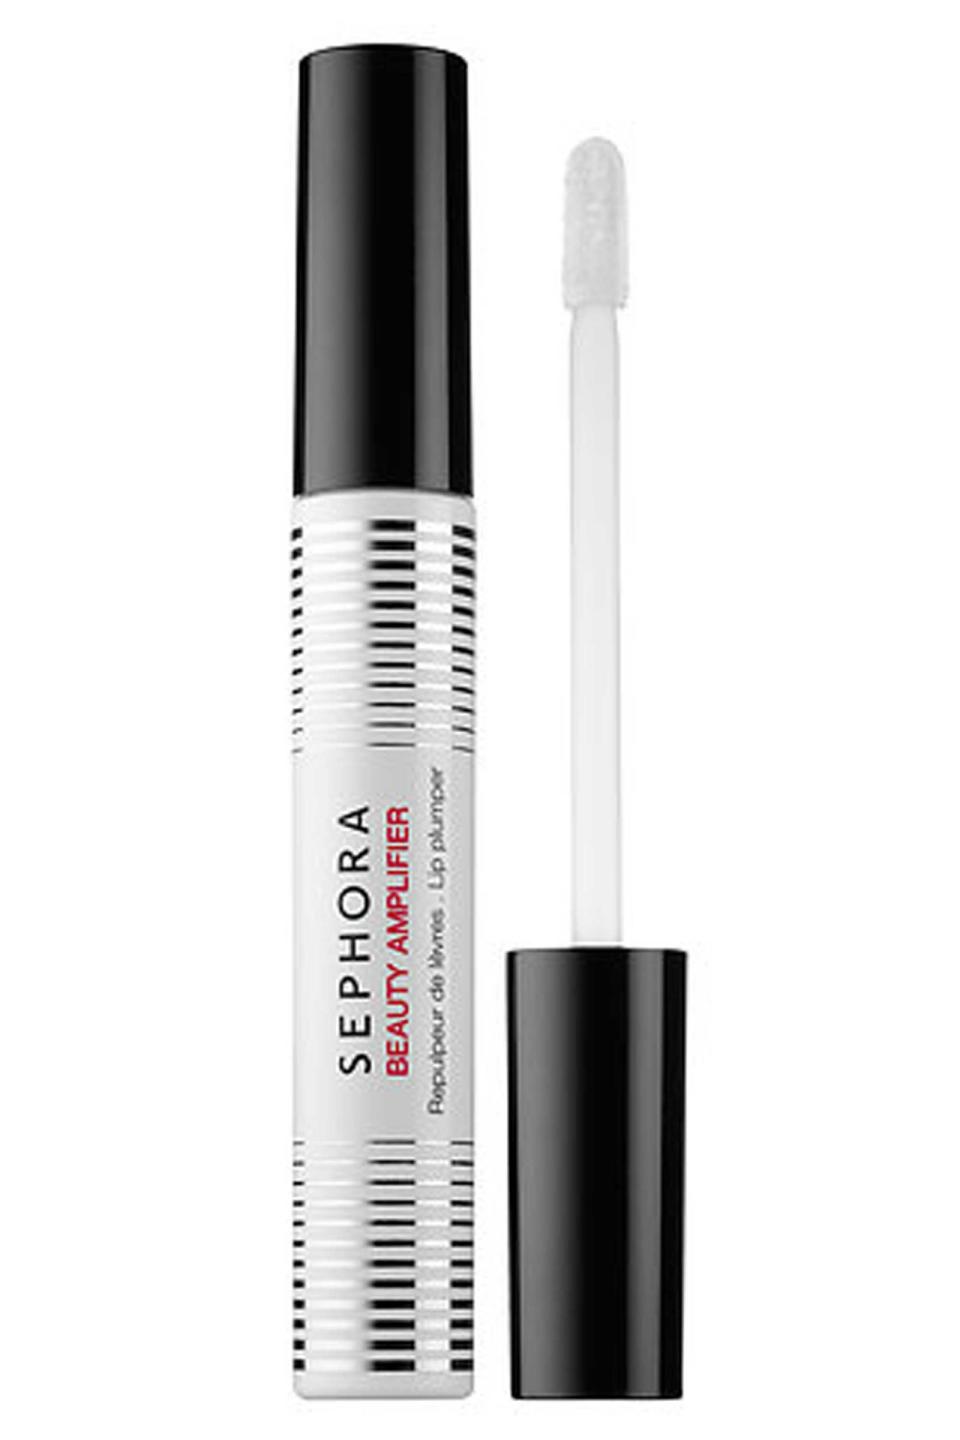 Sephora Beauty Amplifier Lip Plumper